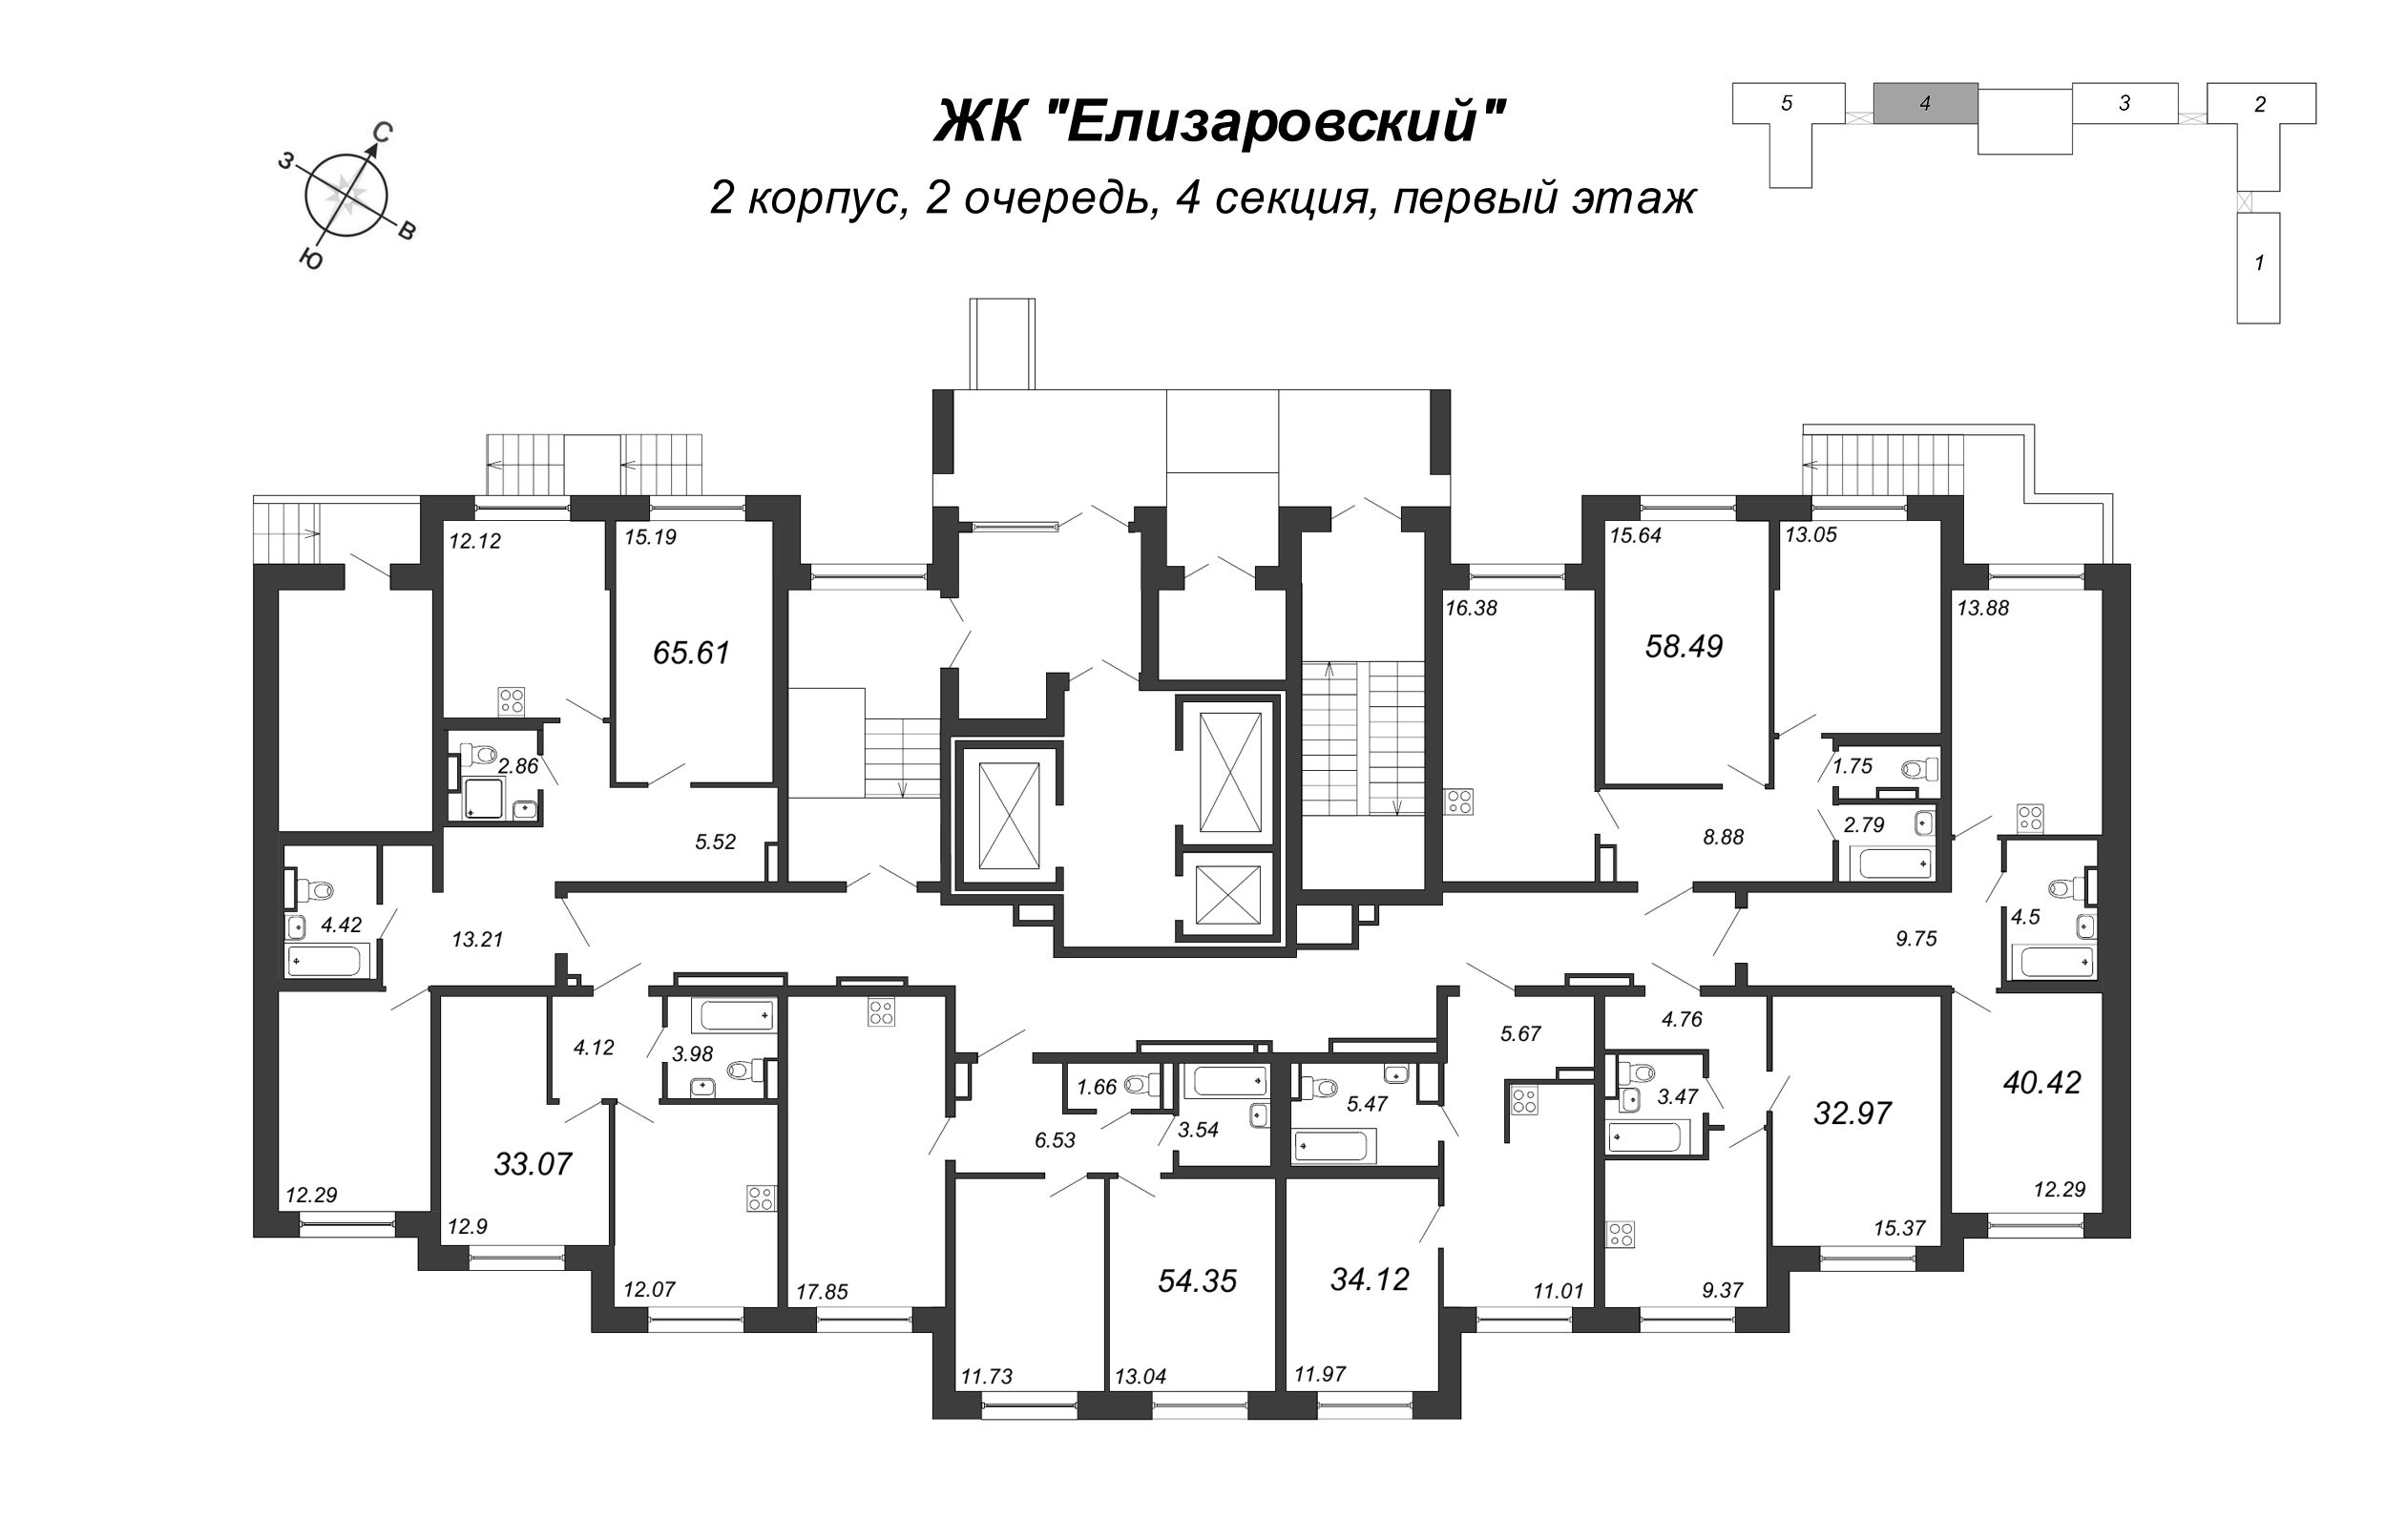 3-комнатная (Евро) квартира, 58.49 м² - планировка этажа